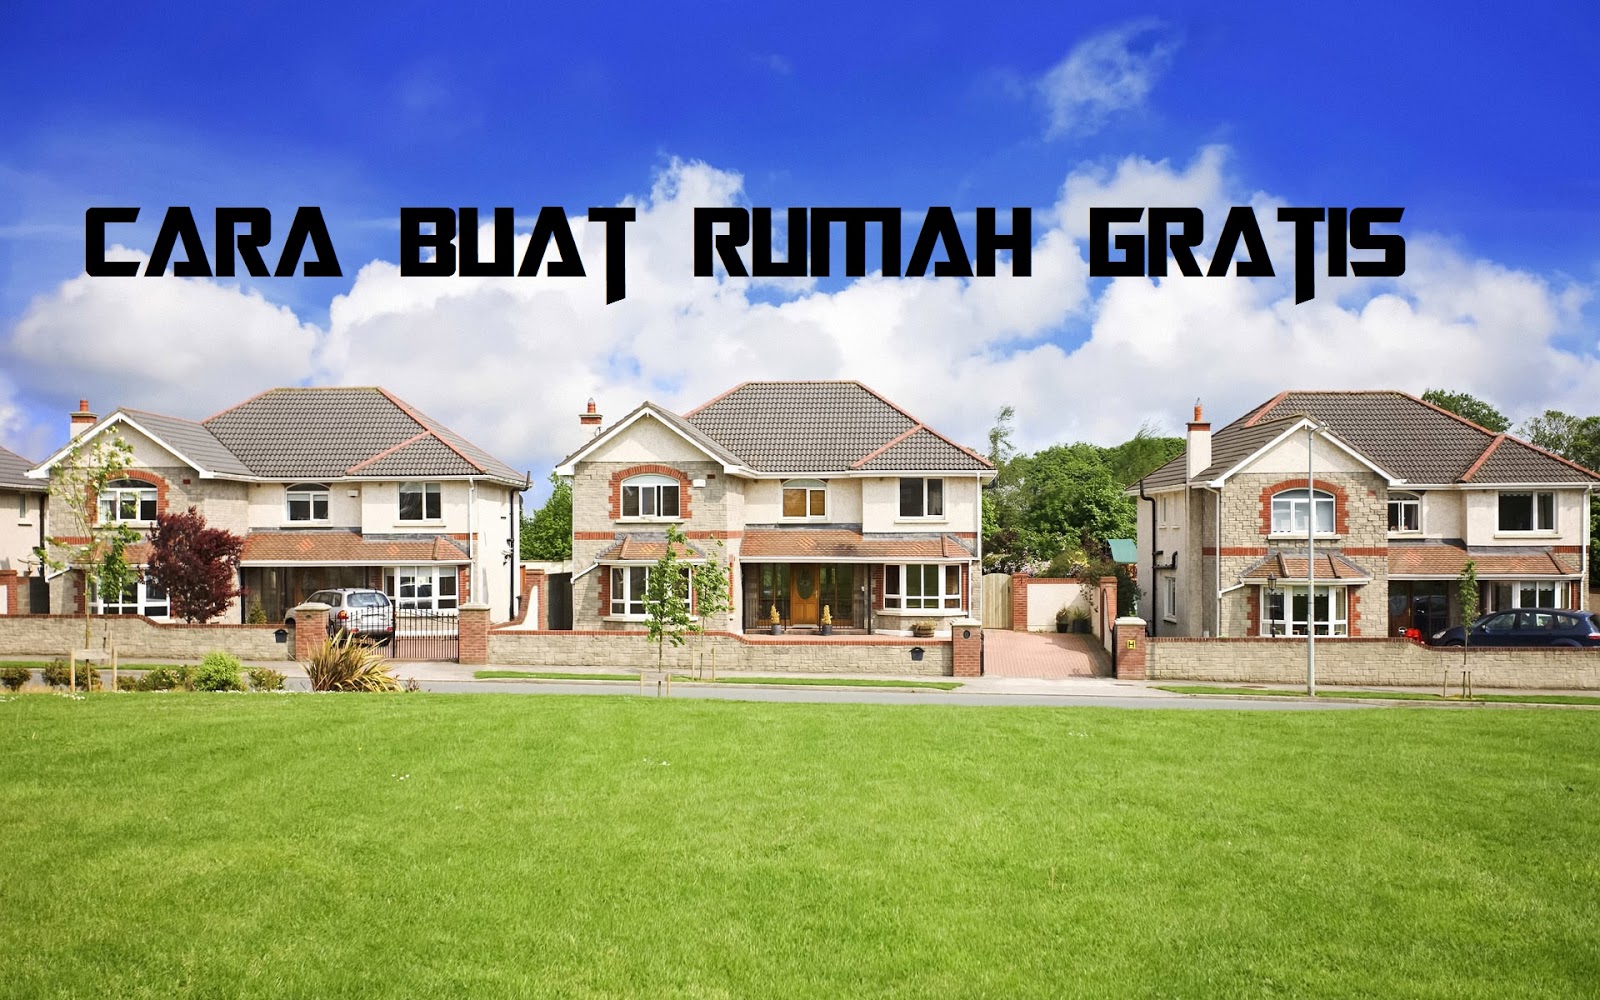 beli wallpaper,property,home,estate,house,real estate